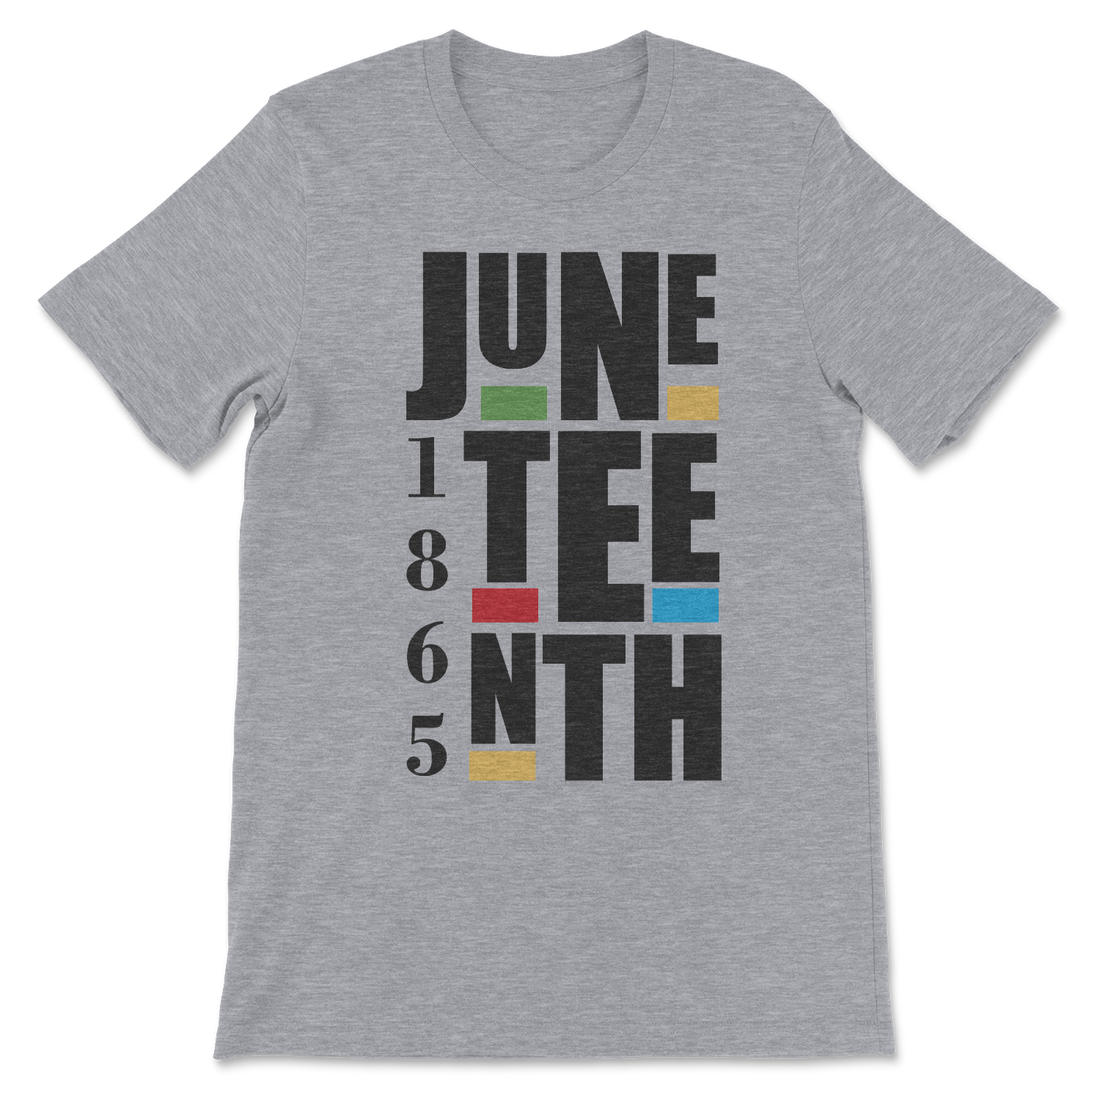 Juneteenth-1865-block-print-black-history-tee-shirt-fab five print shop